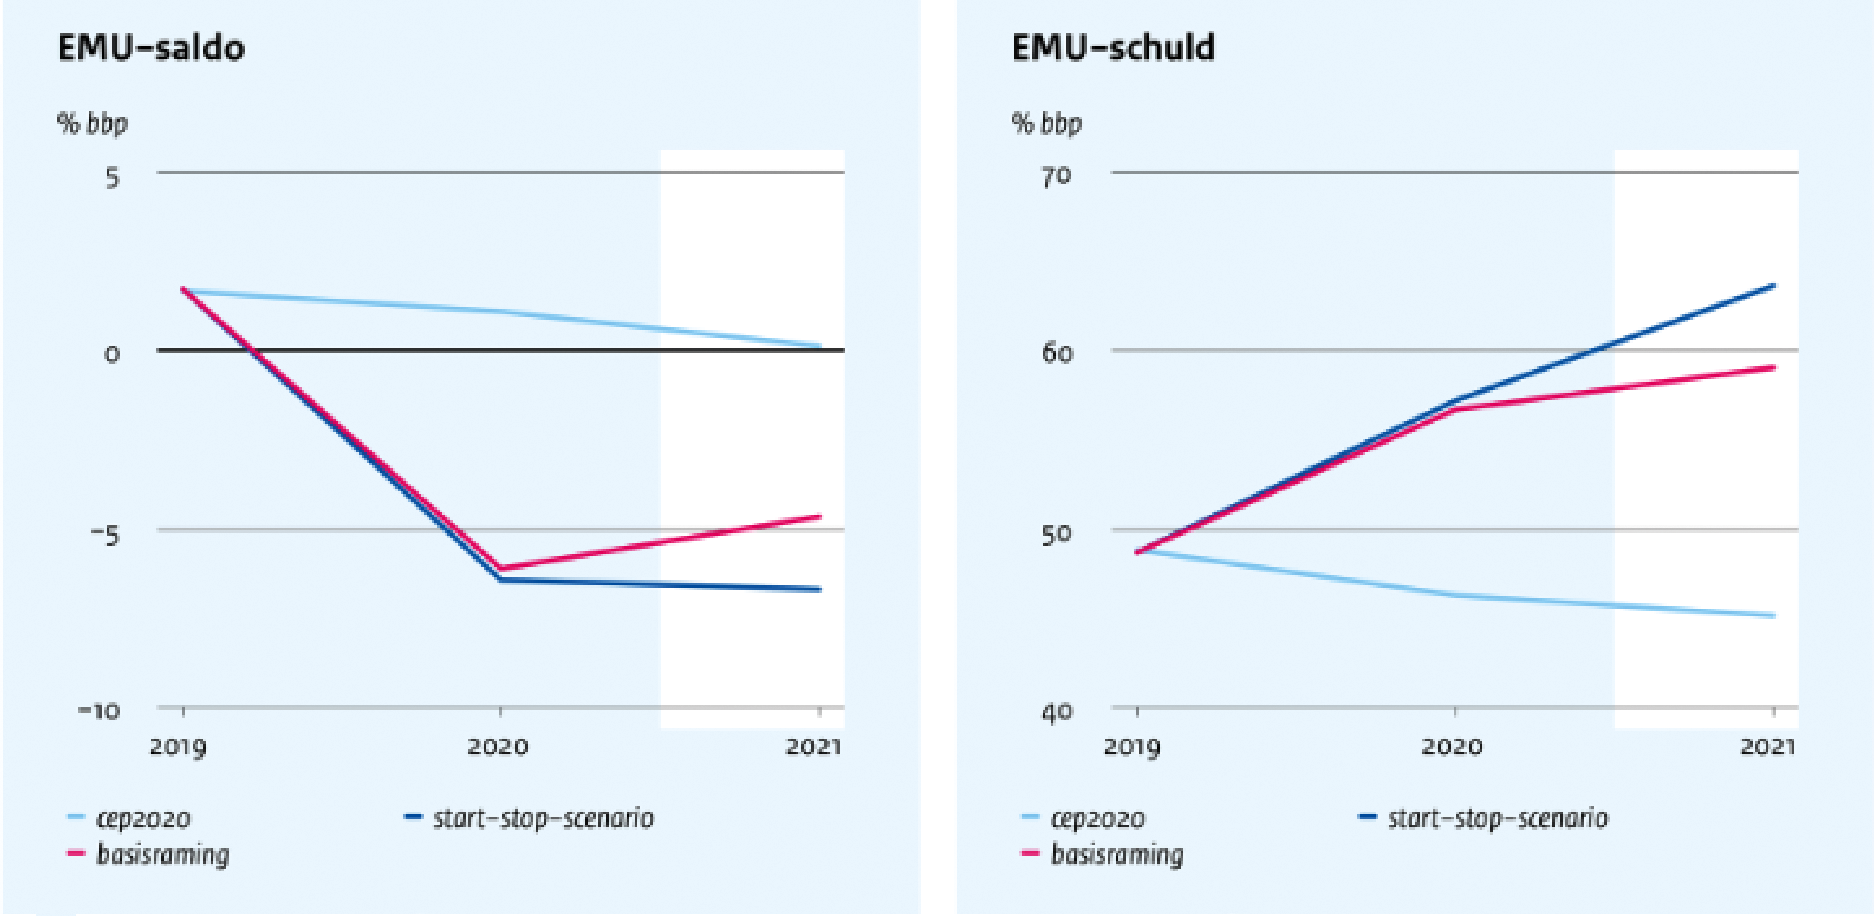 Figuur 2a en 2b: EMU-saldo en EMU-schuld 2020 en 2021